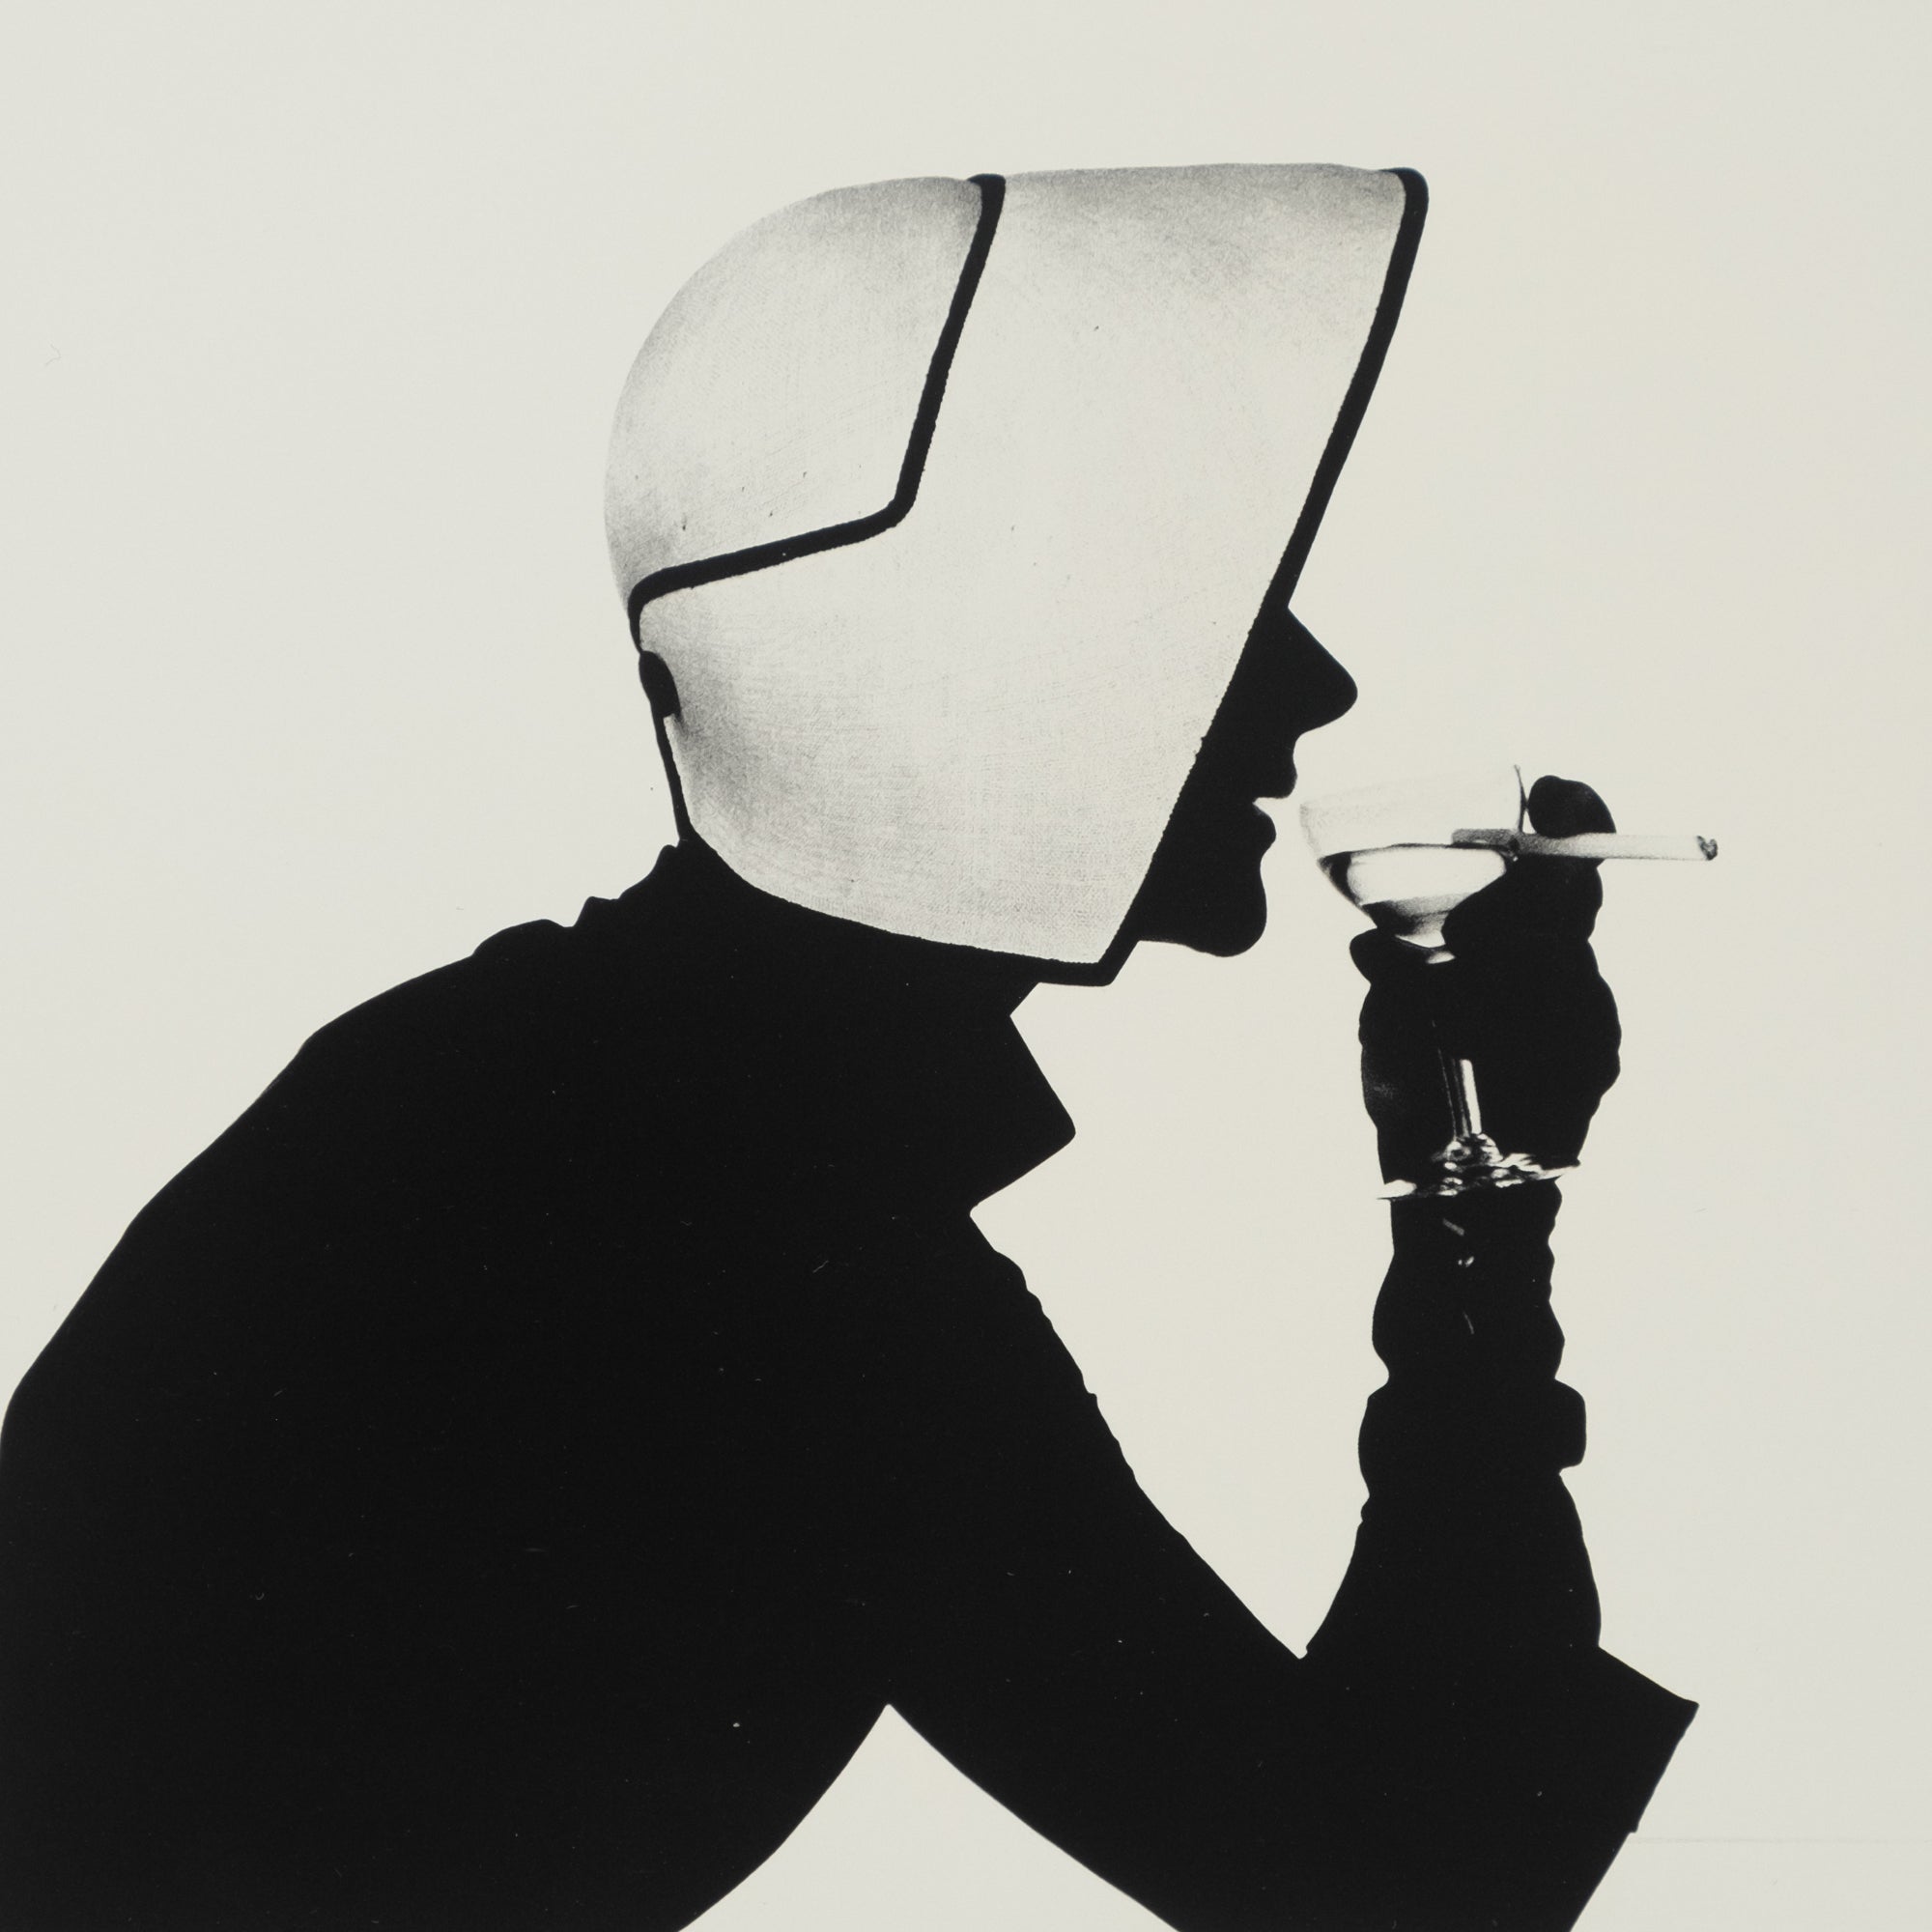 Irving Penn — Eine Retrospektive (A Career in Photography)